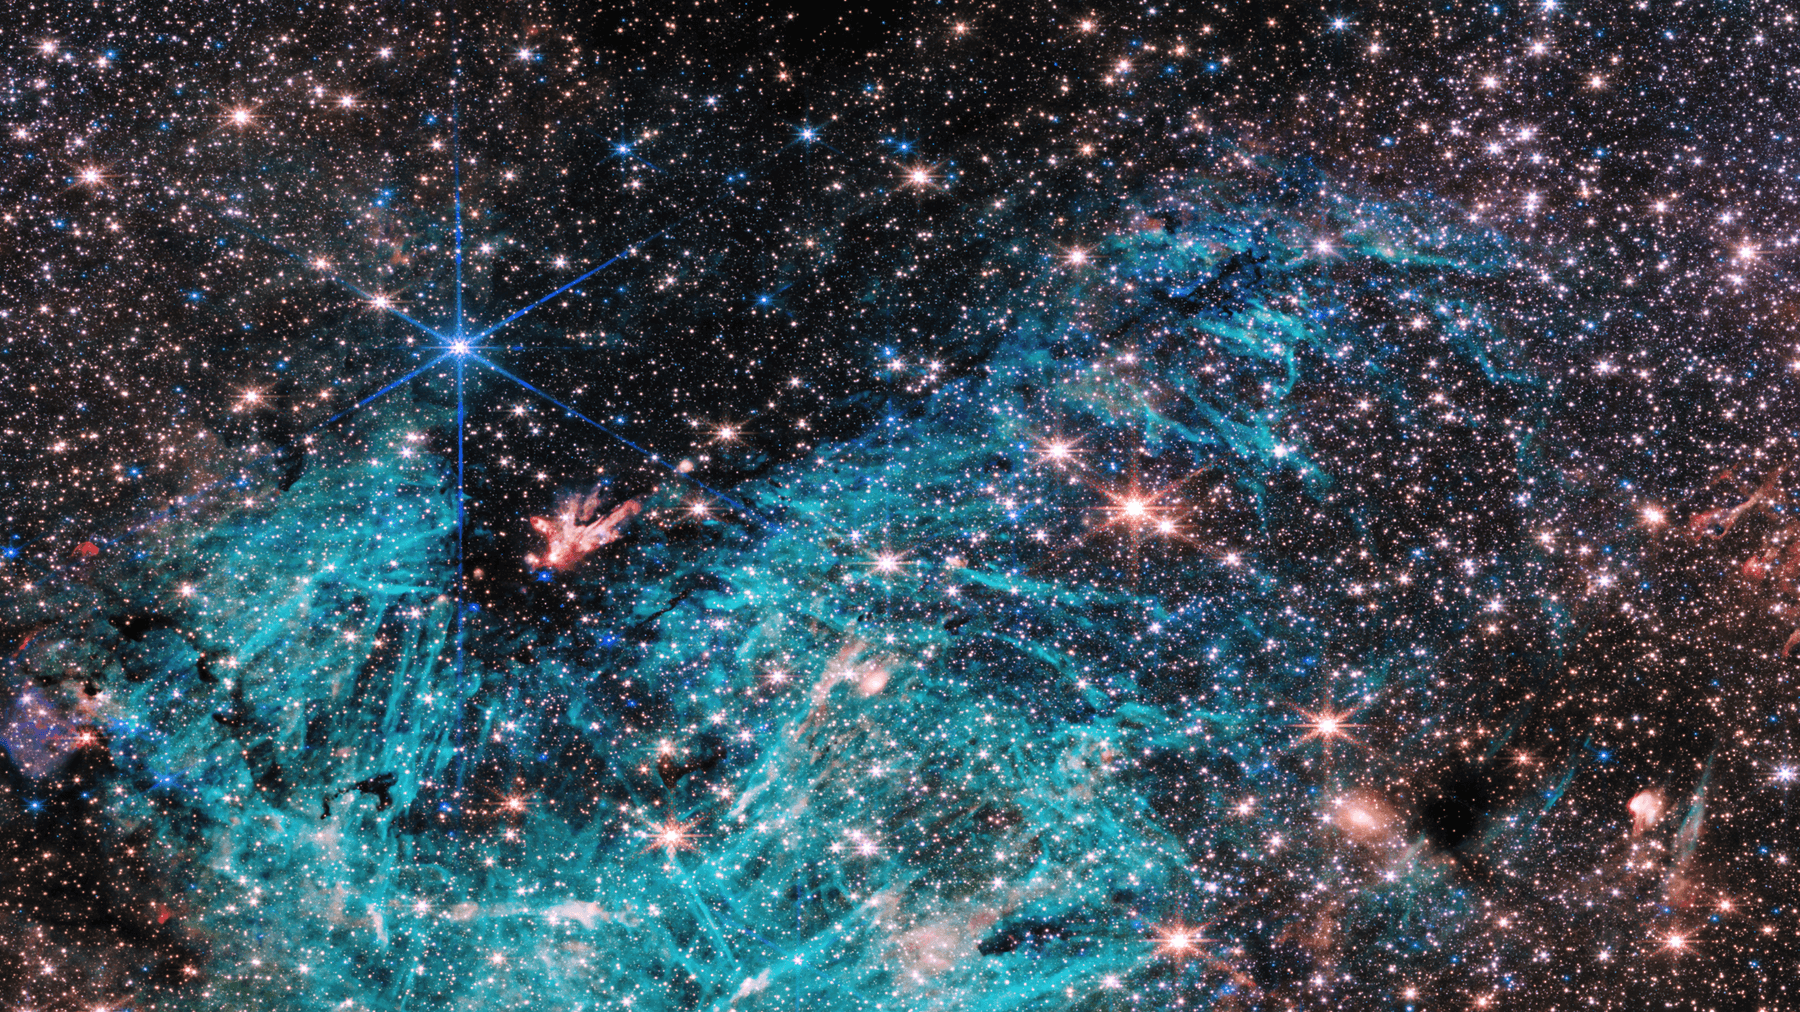 Astronomy: The Webb Telescope takes amazing images